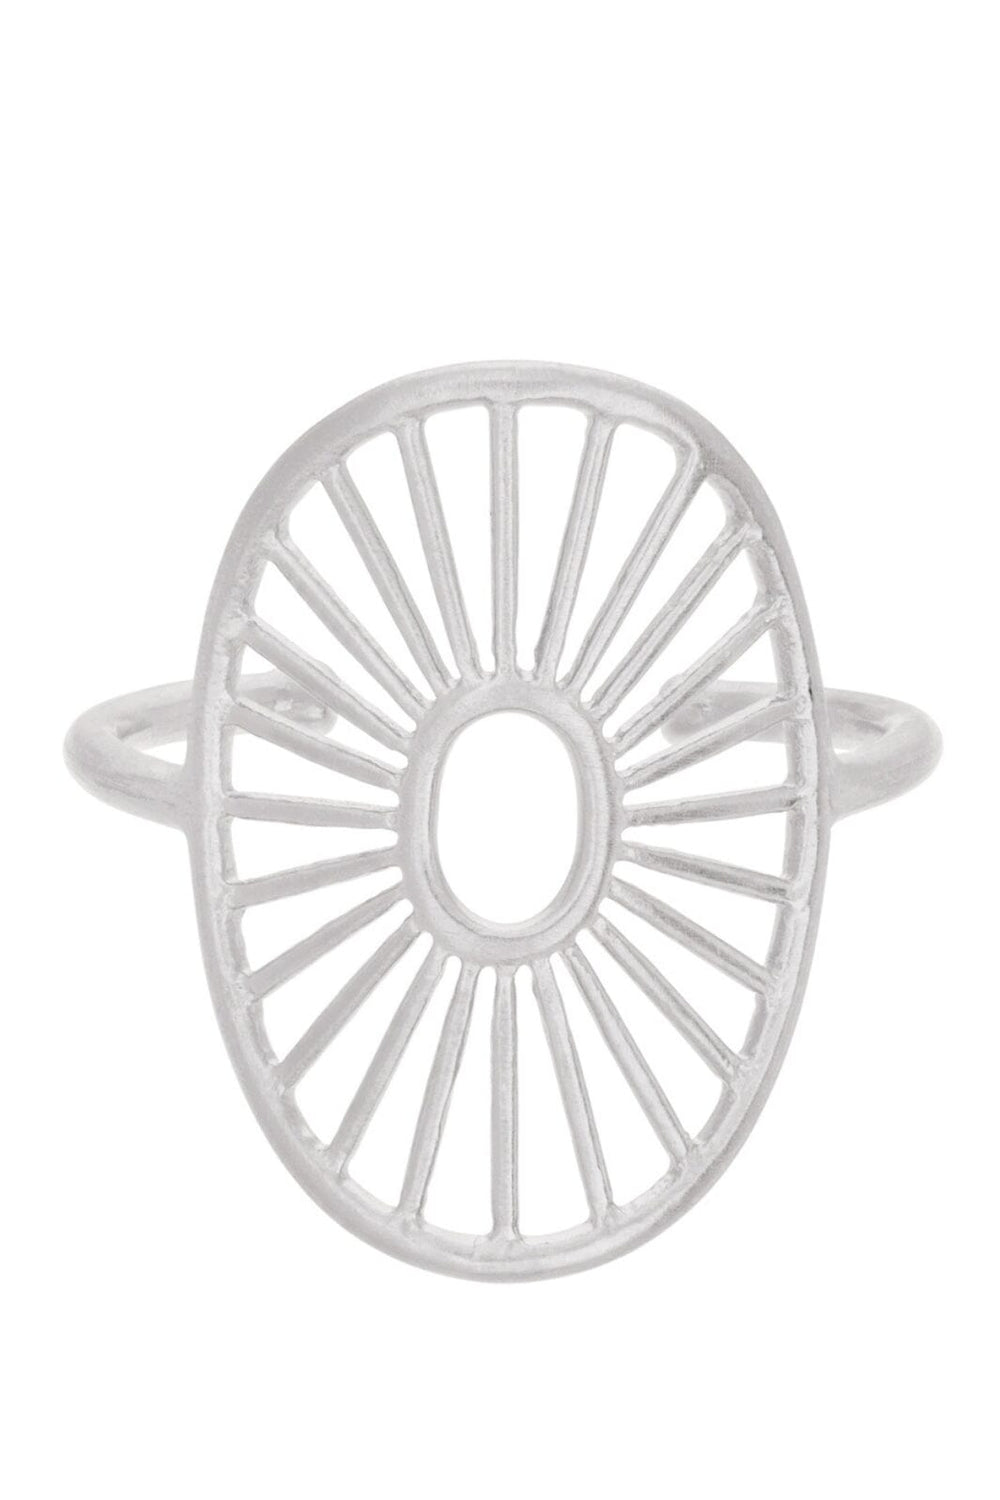 Pernille Corydon Jewellery - Daylight Ring - Silver Ringe 